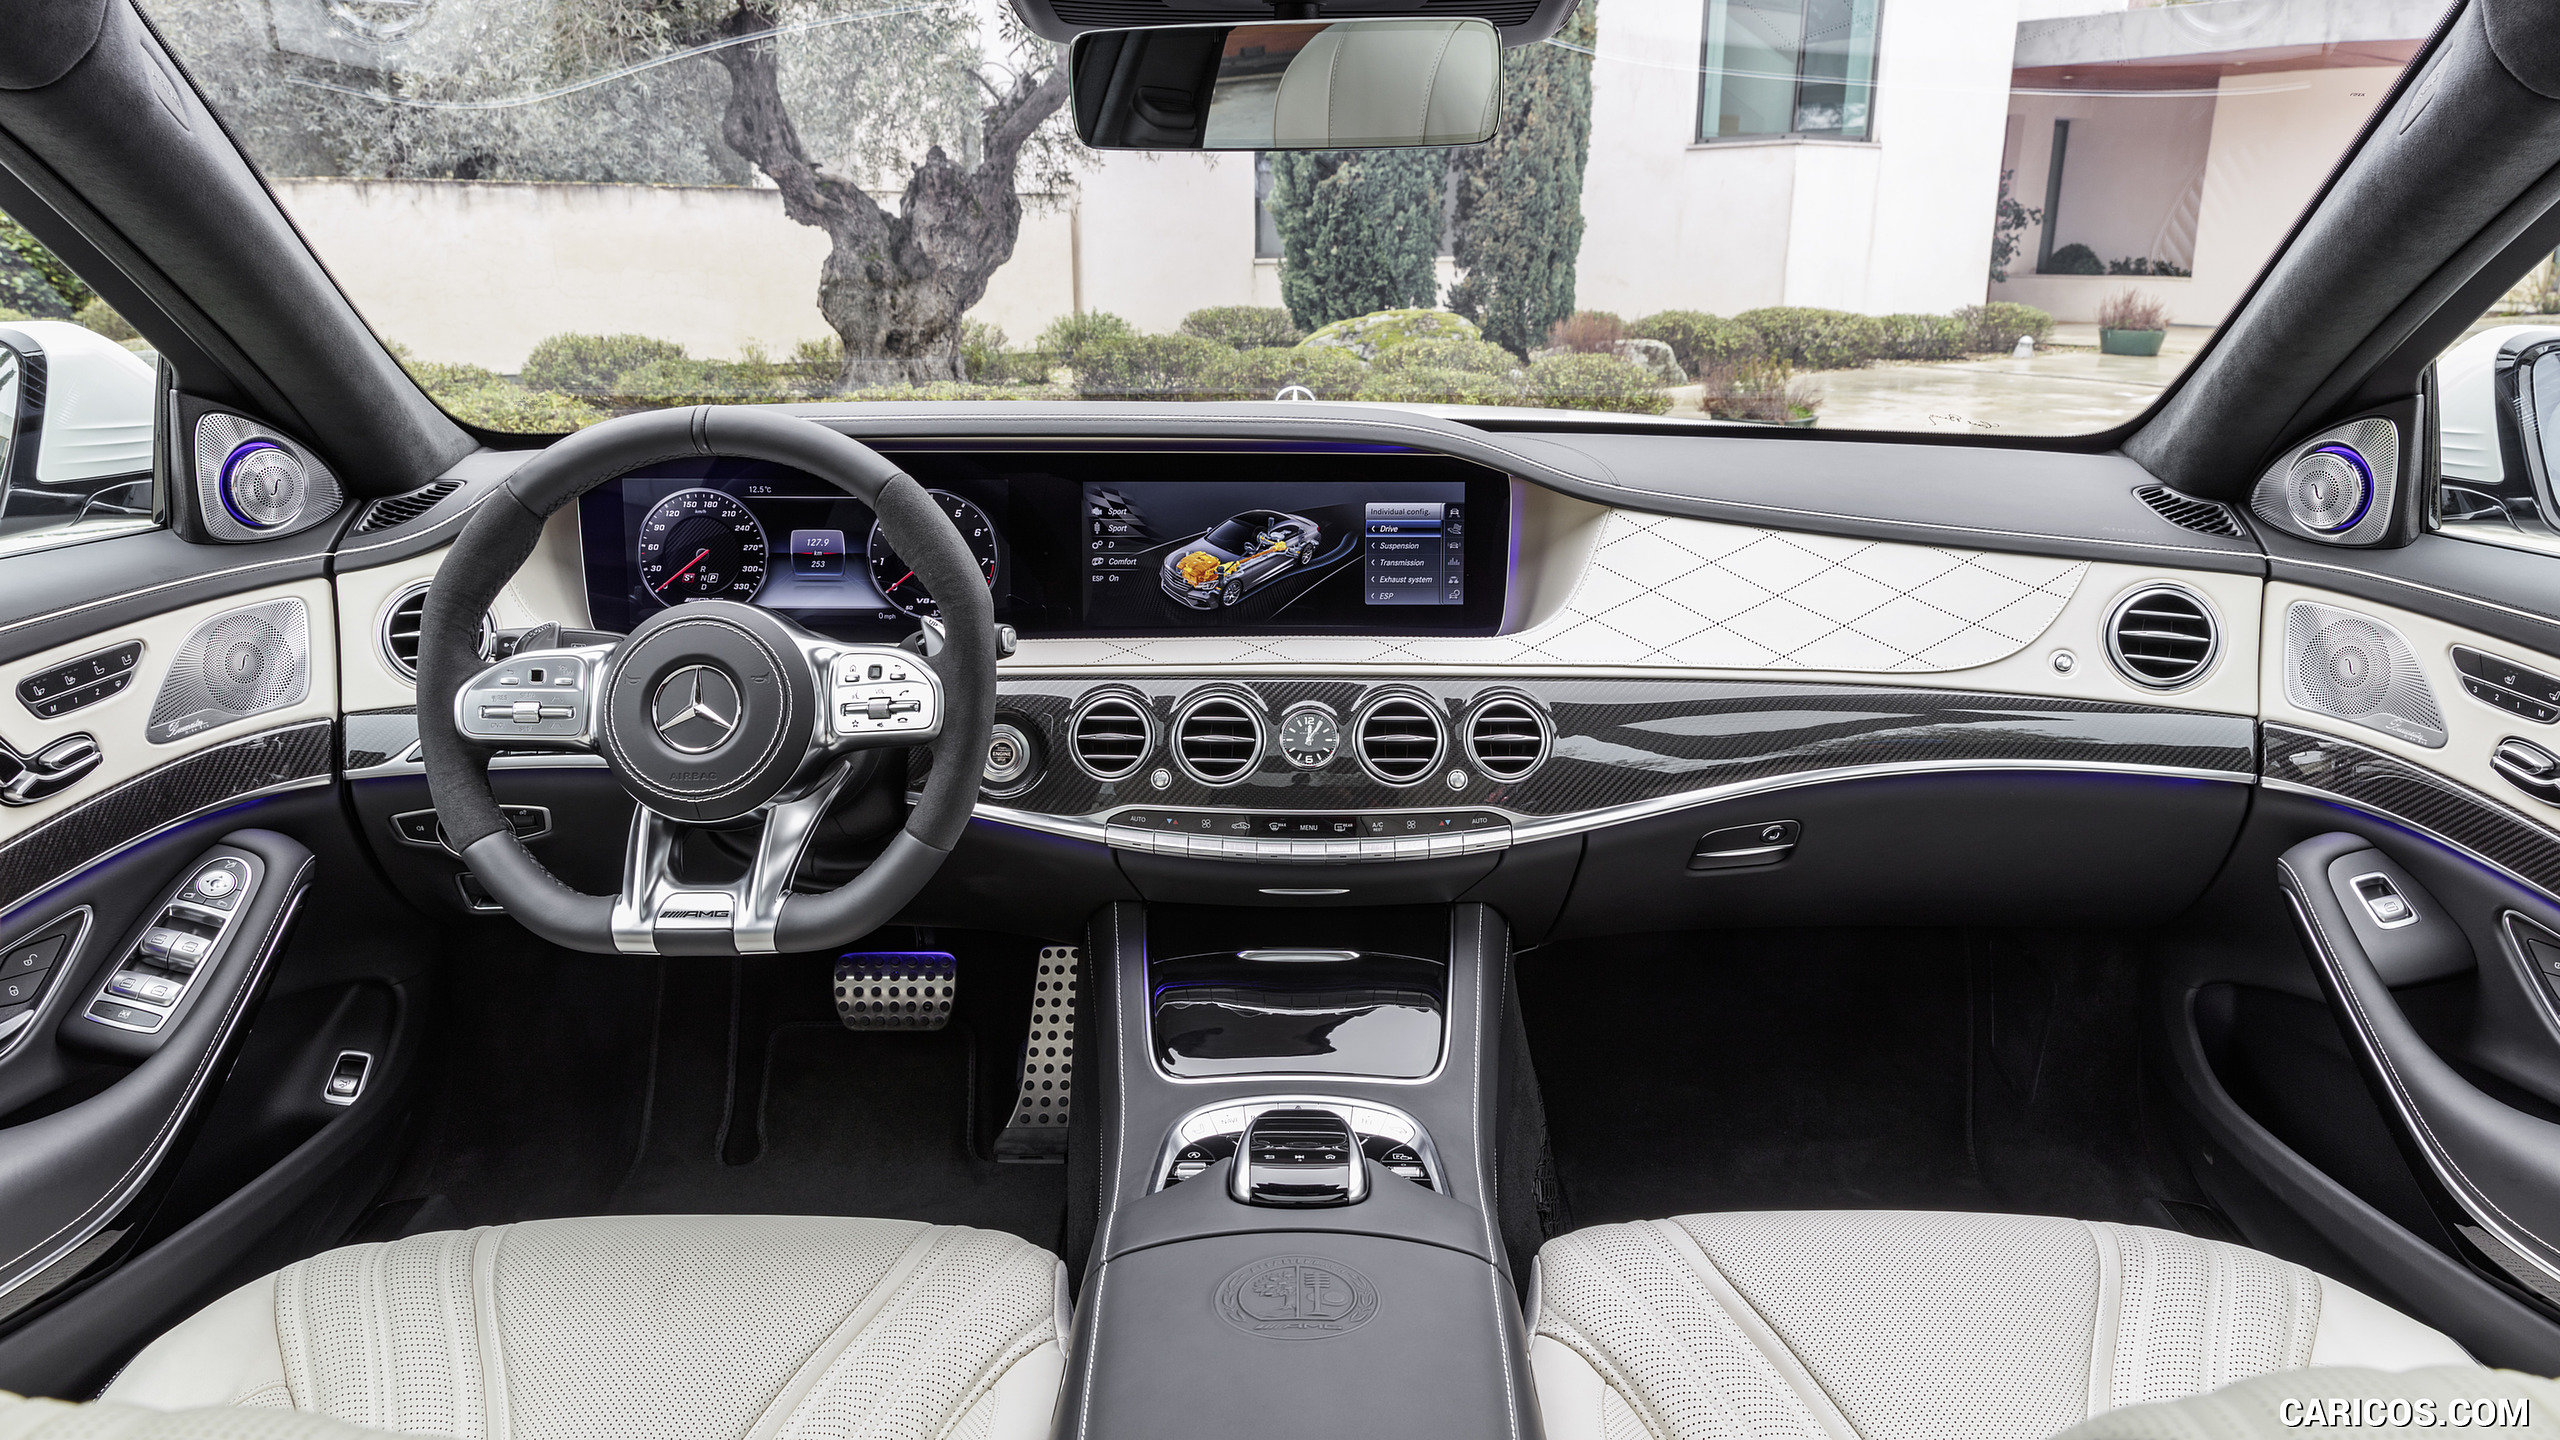 2018 Mercedes-AMG S63 4MATIC+ - Interior, Cockpit, #25 of 100